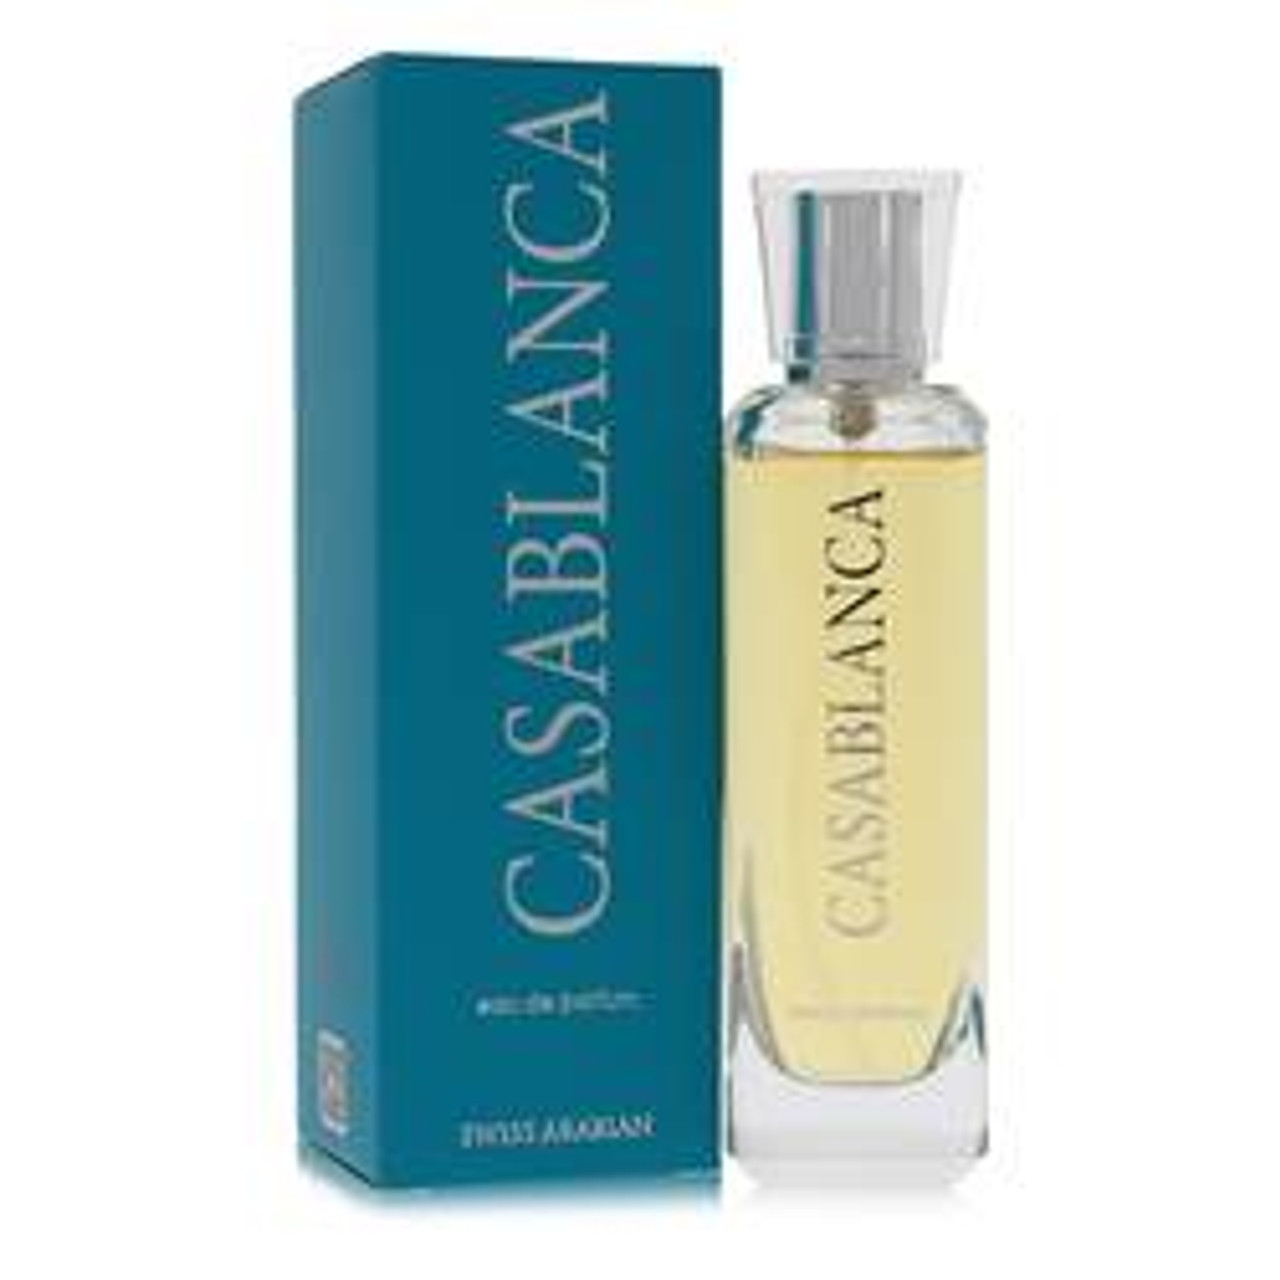 Casablanca Perfume By Swiss Arabian Eau De Parfum Spray (Unisex) 3.4 oz for Women - *Pre-Order